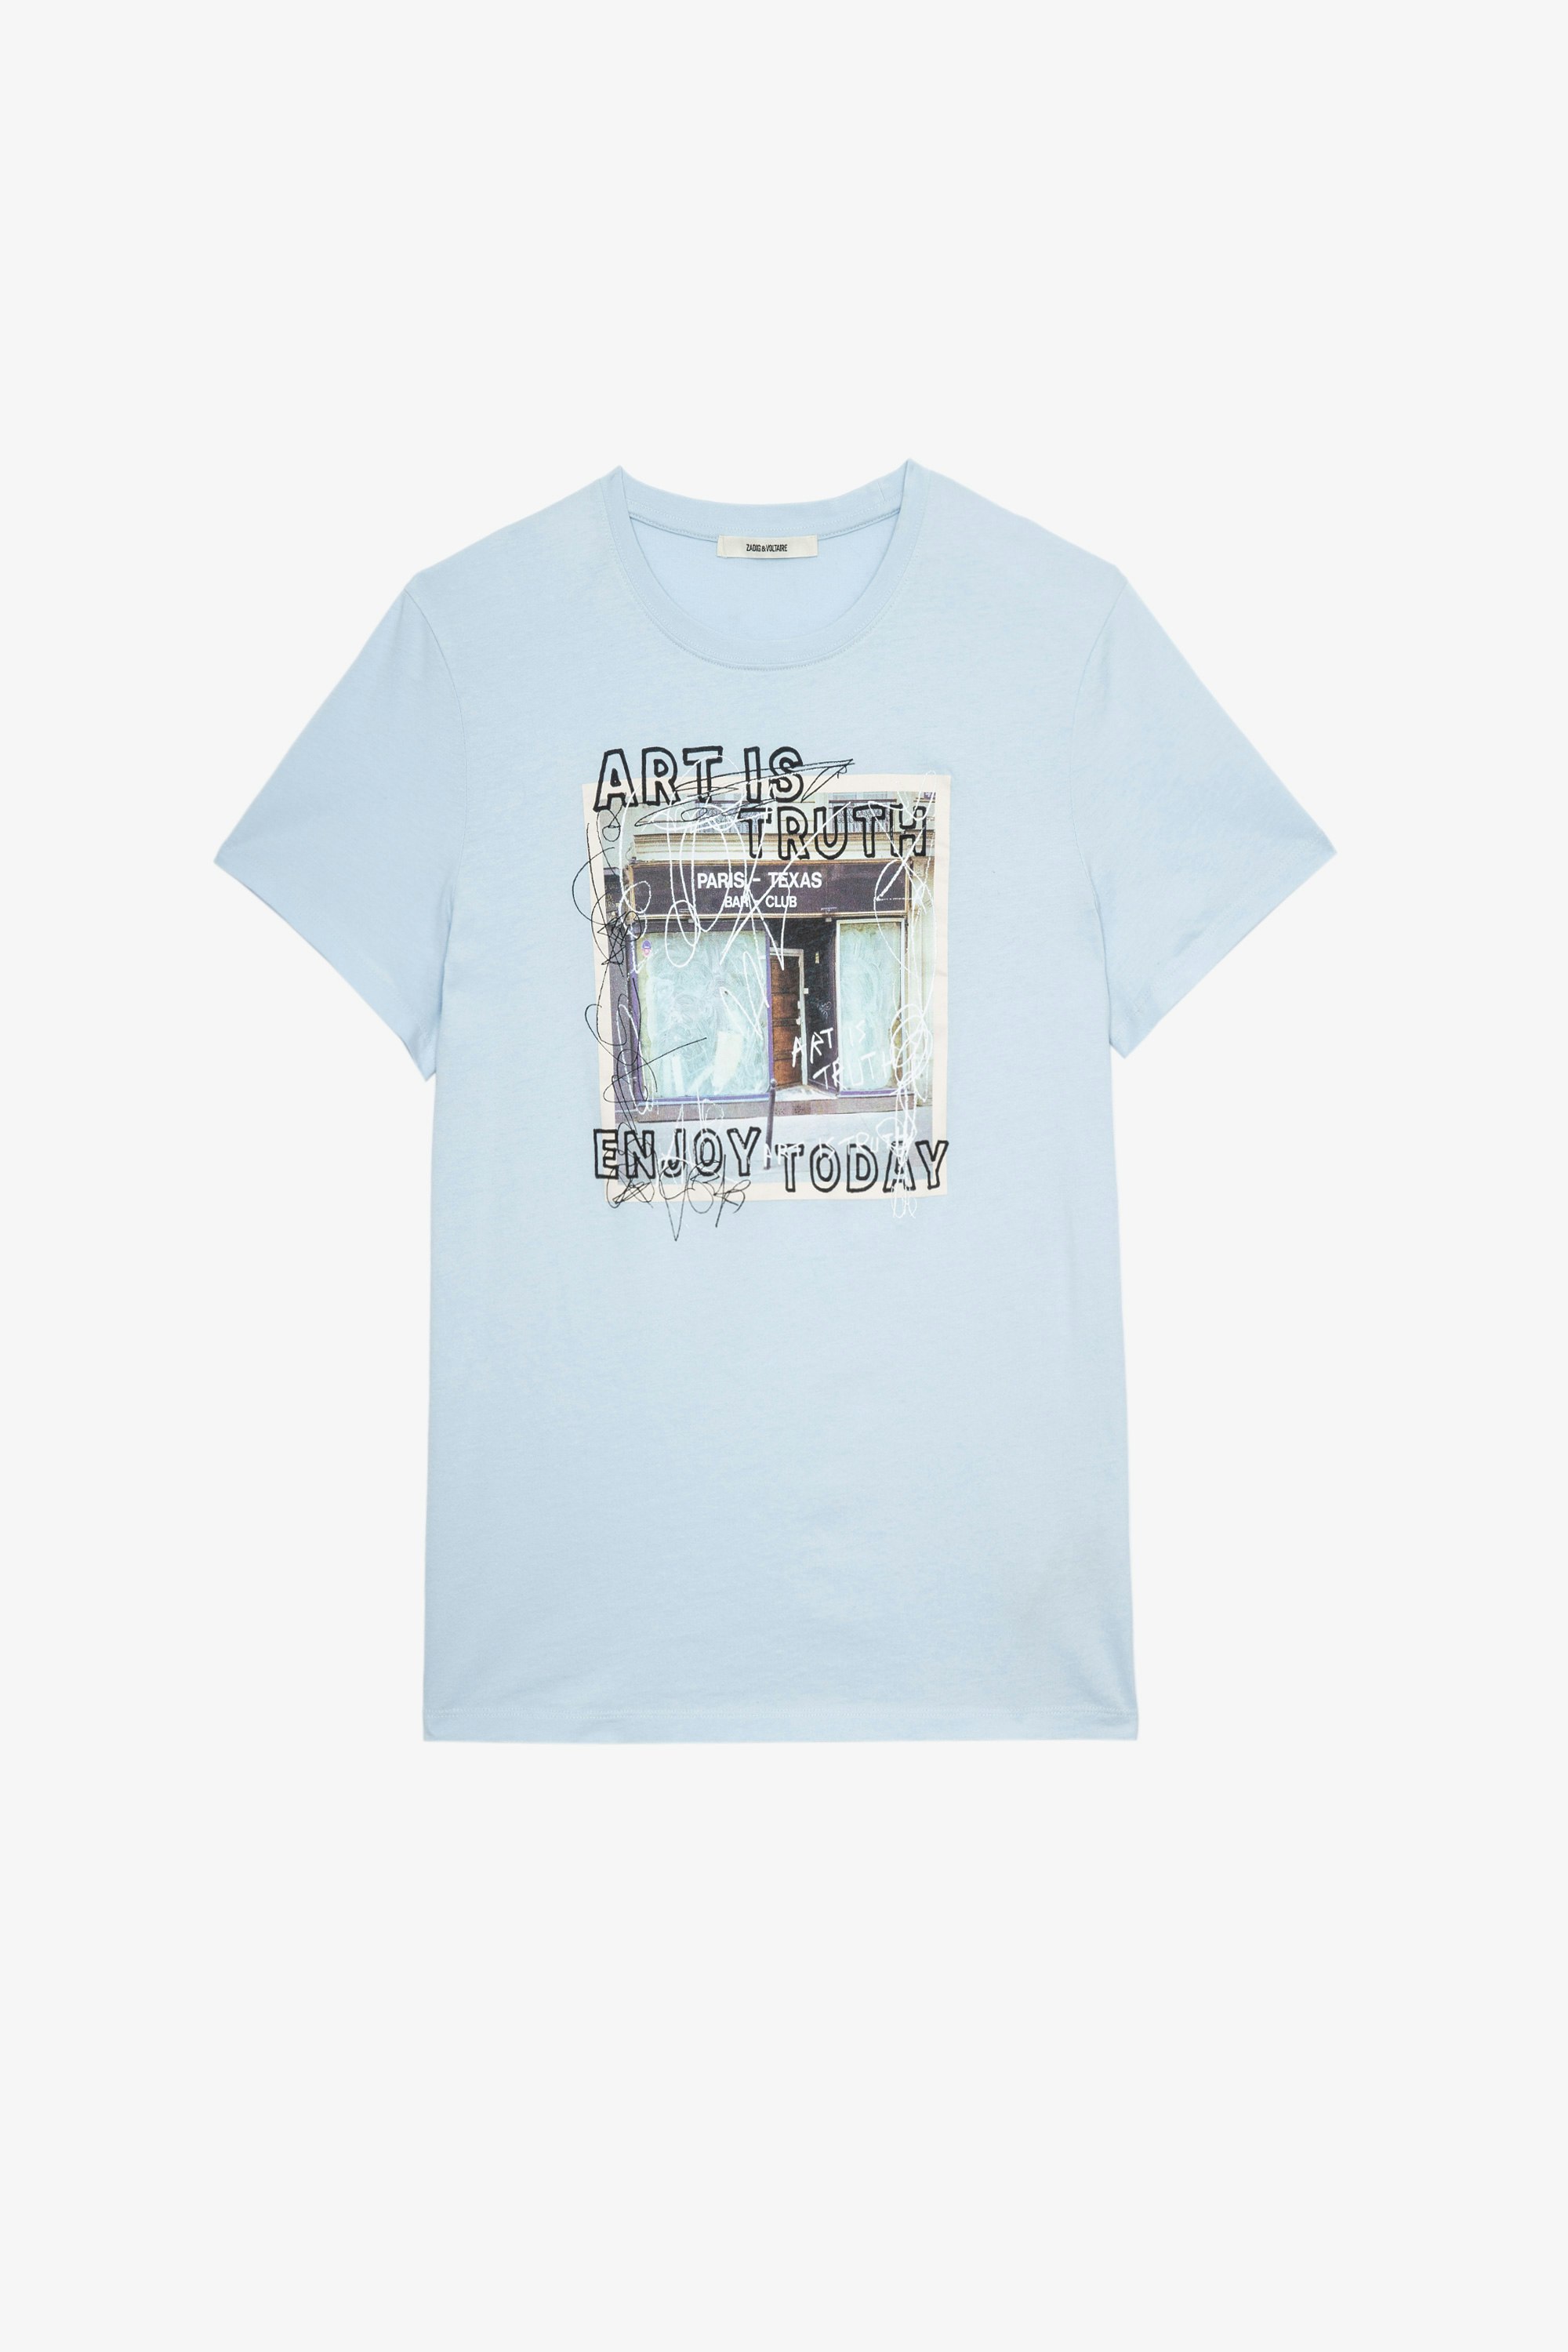 Paris Texas フォトプリント Ted Ｔシャツ Men’s light blue cotton photoprint T-shirt